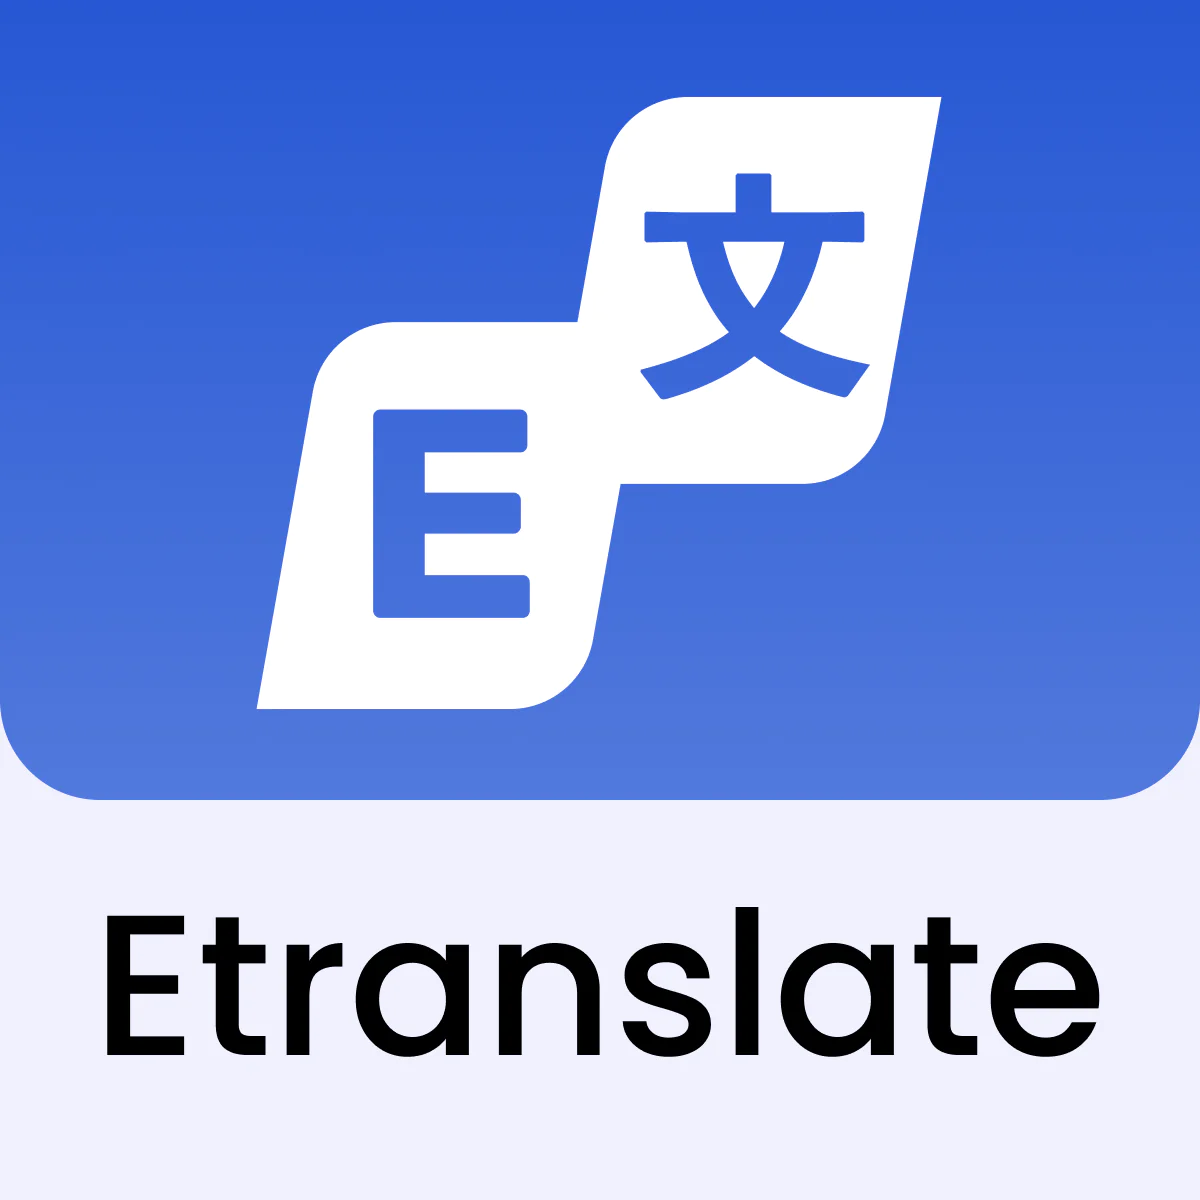 ETranslate: Language Translate